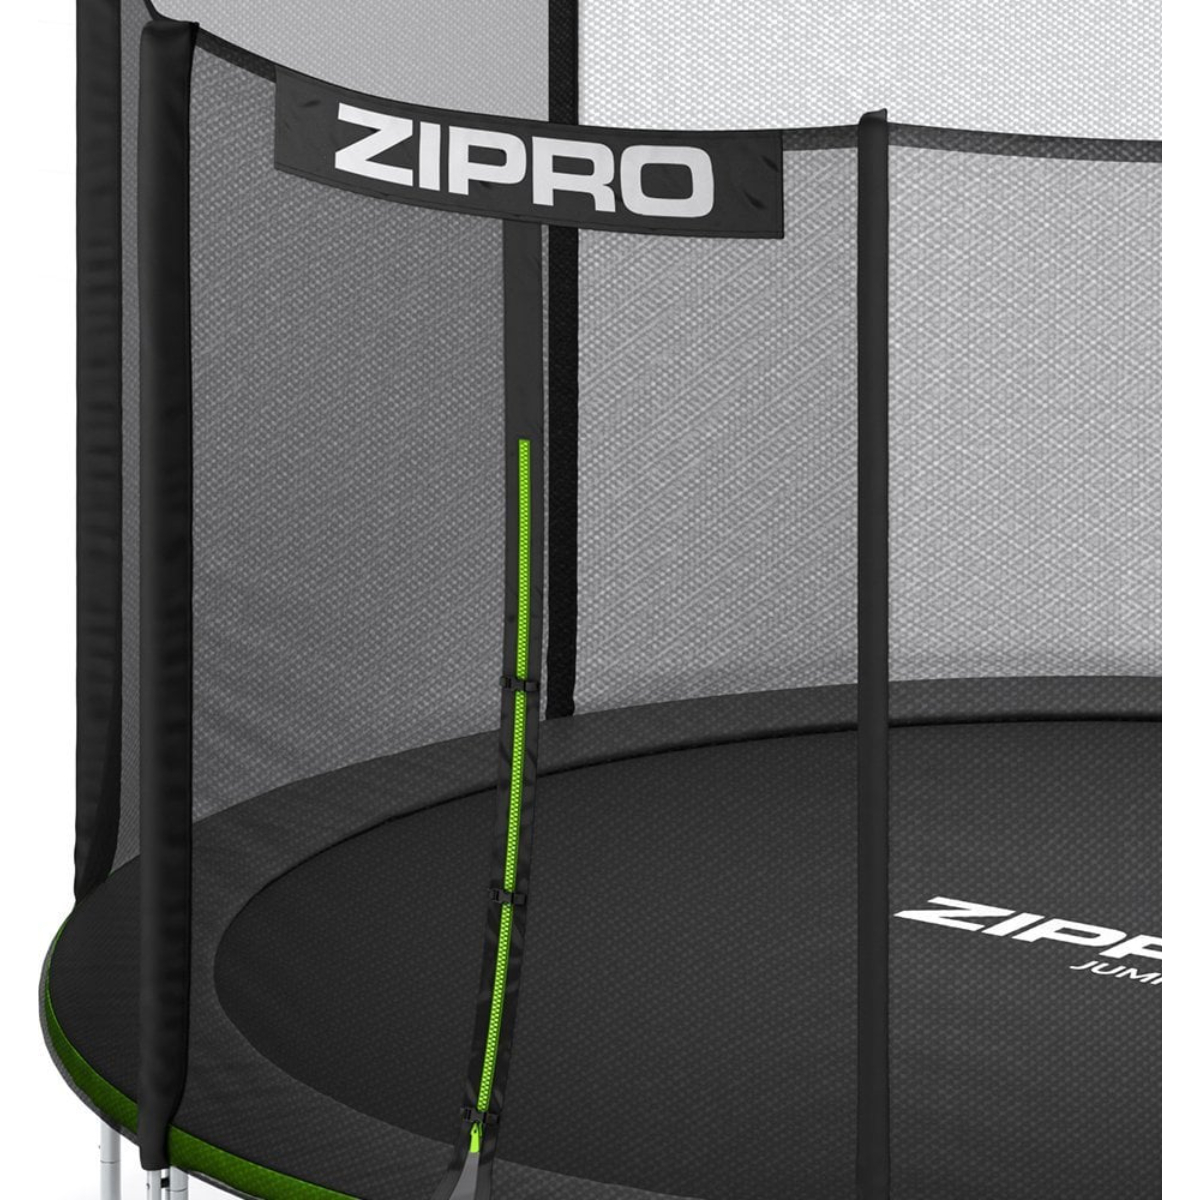 ZIPRO Jump Pro 10FT schwarz Trampolin, 312cm